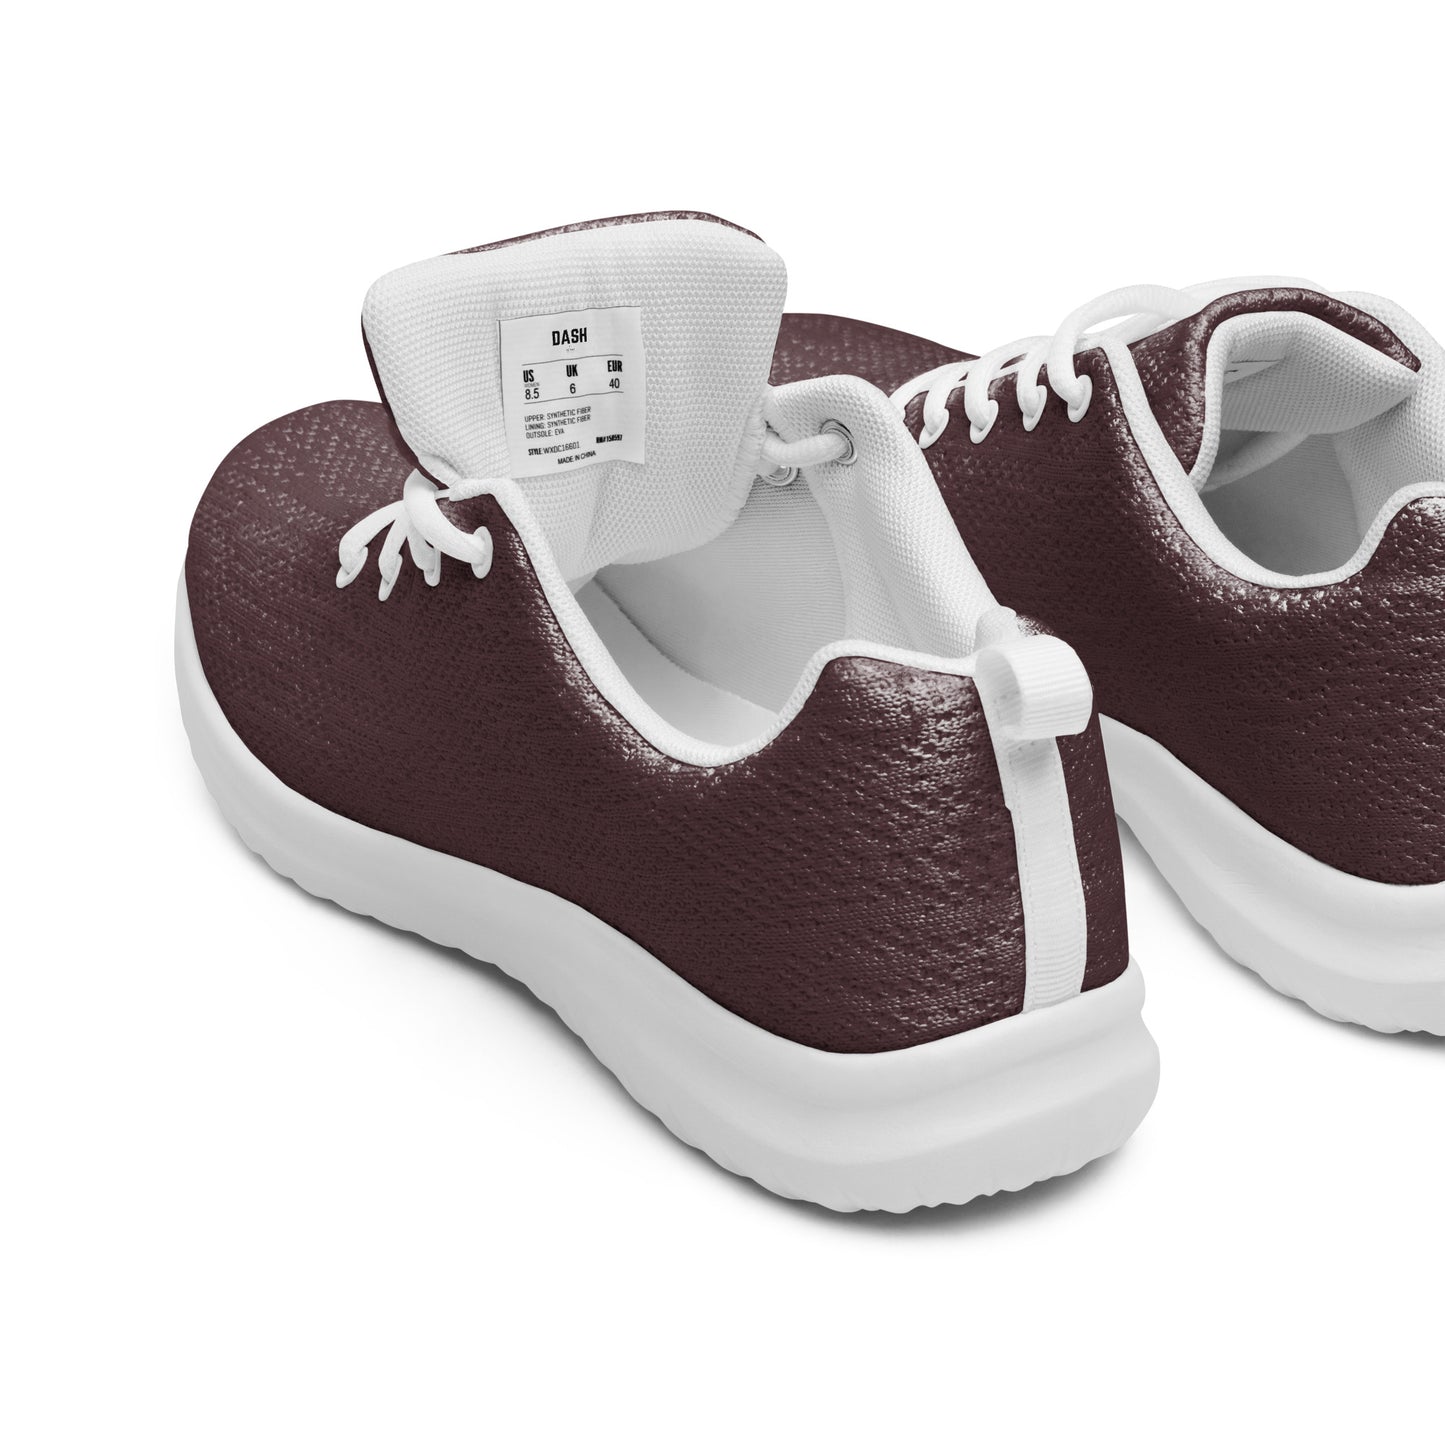 DASH Dark Chocolate Women’s Athletic Shoes Lightweight Breathable Design by IOBI Original Apparel